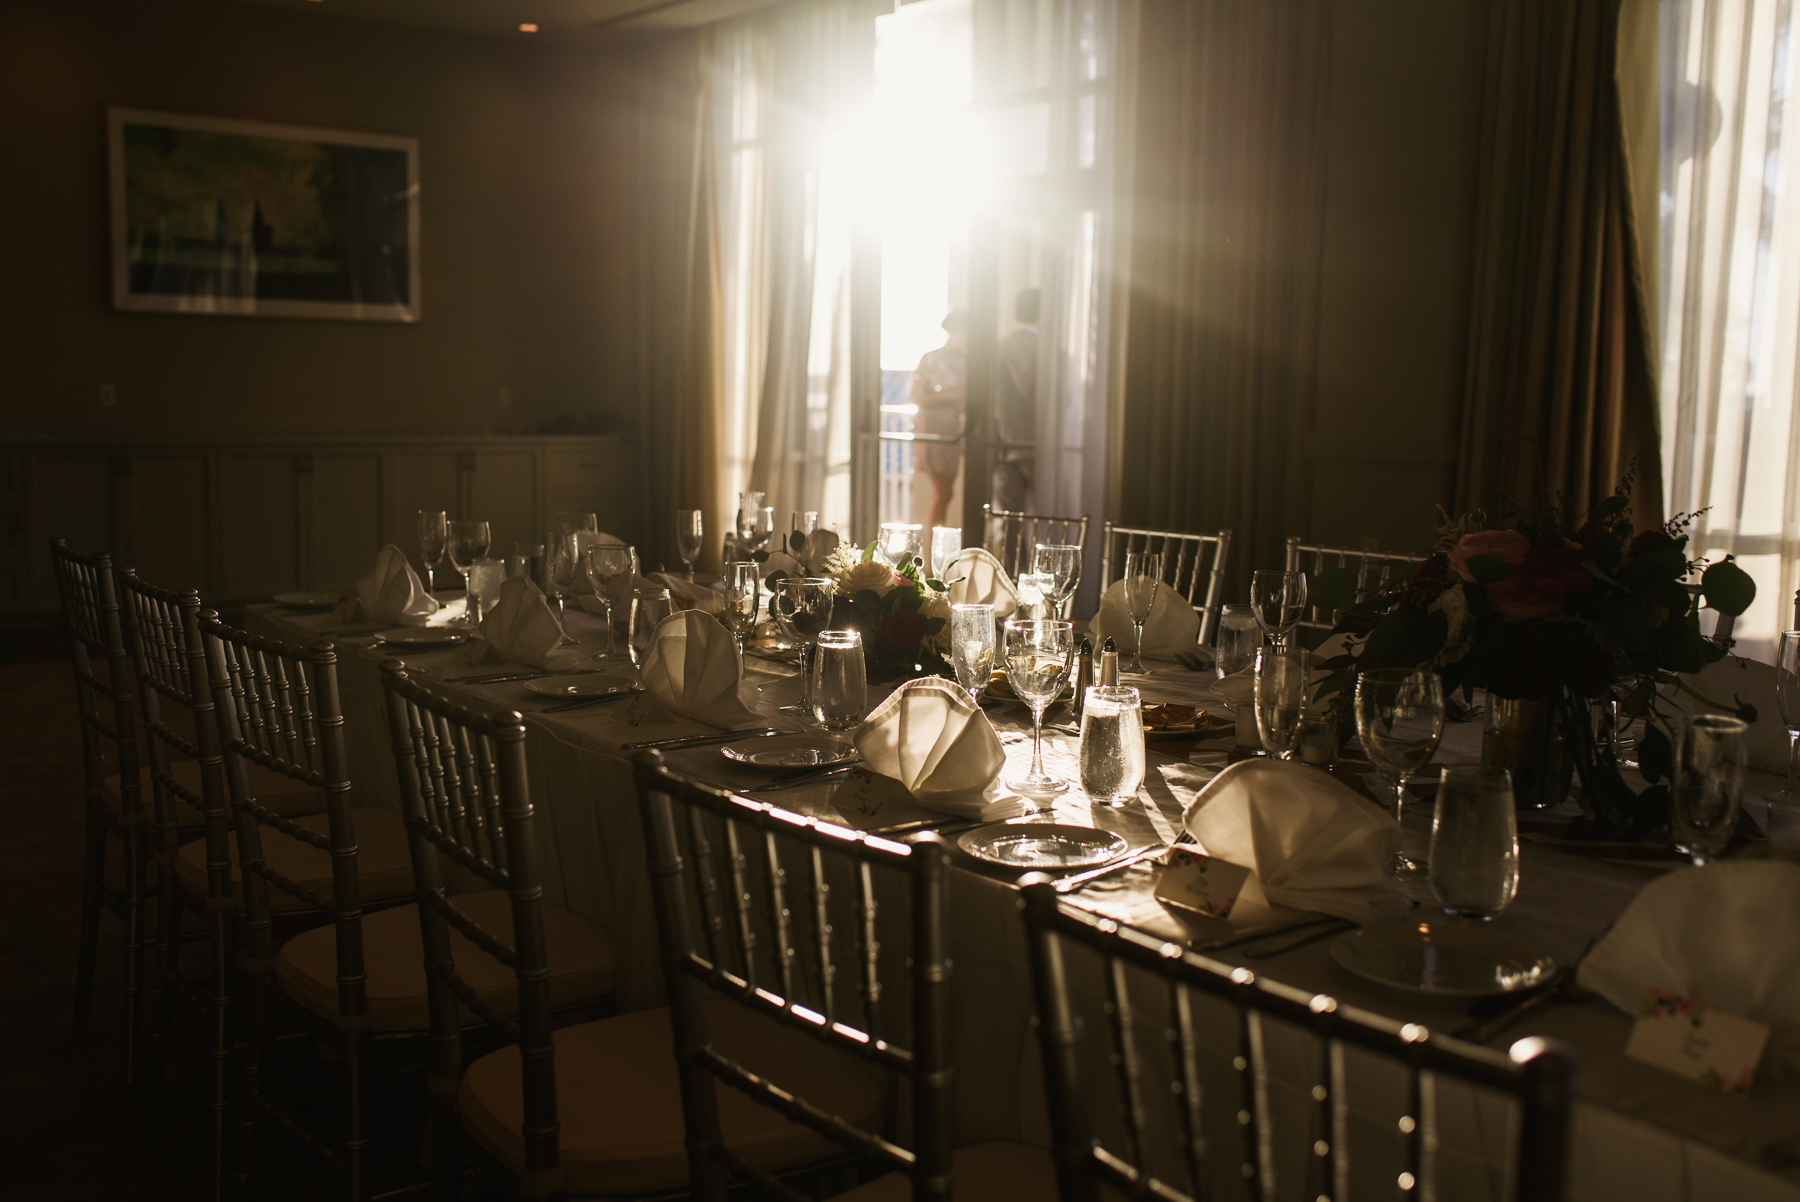 sanibel marriott wedding reception table